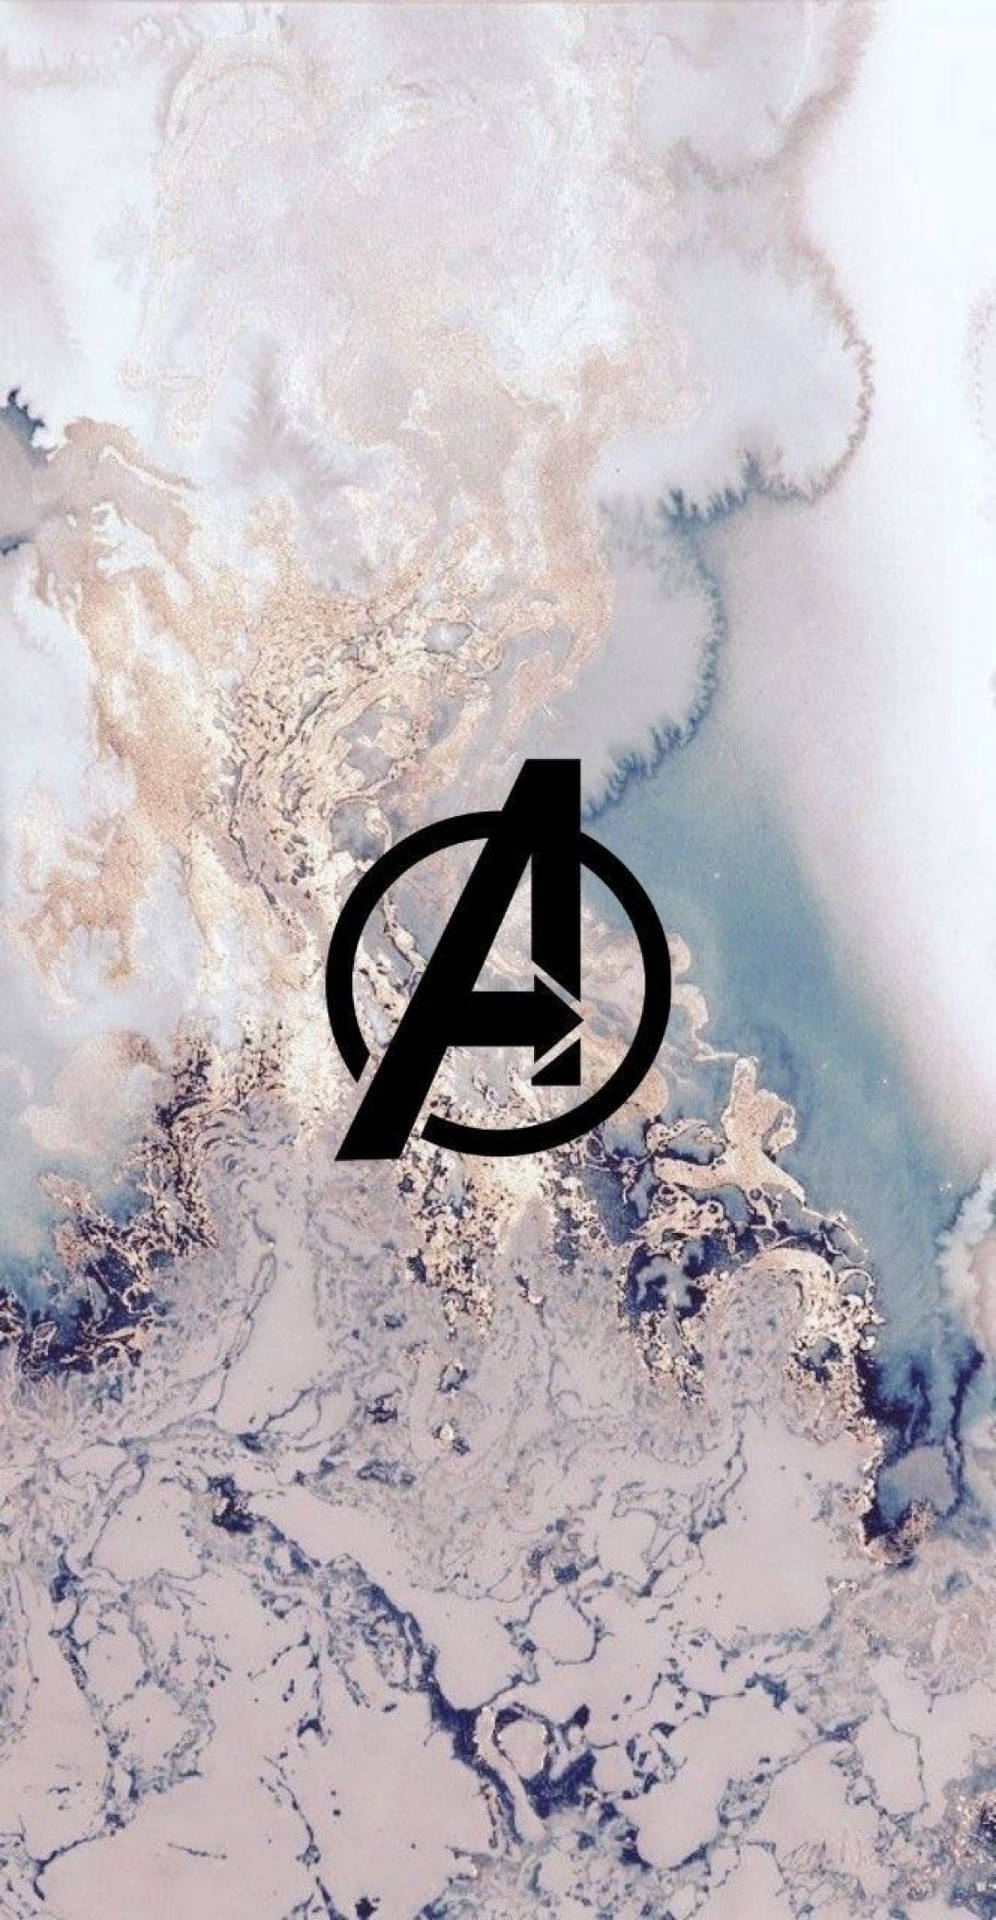 Free Avengers Logo Wallpaper Downloads, [100+] Avengers Logo Wallpapers for  FREE 